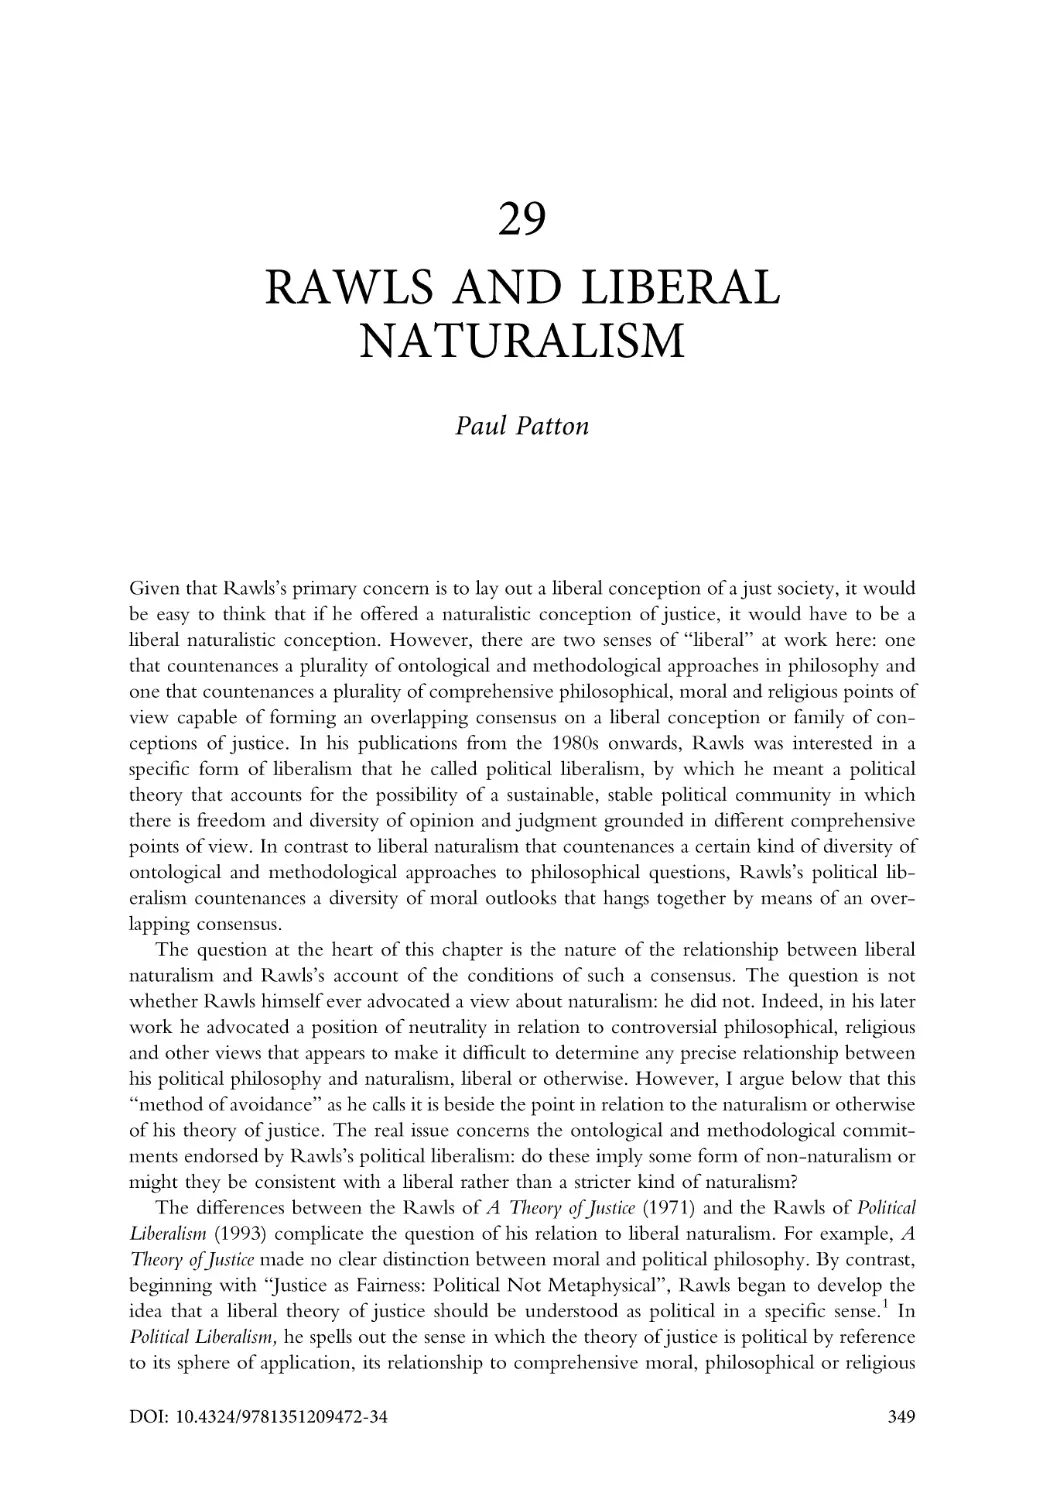 29. Rawls and liberal naturalism